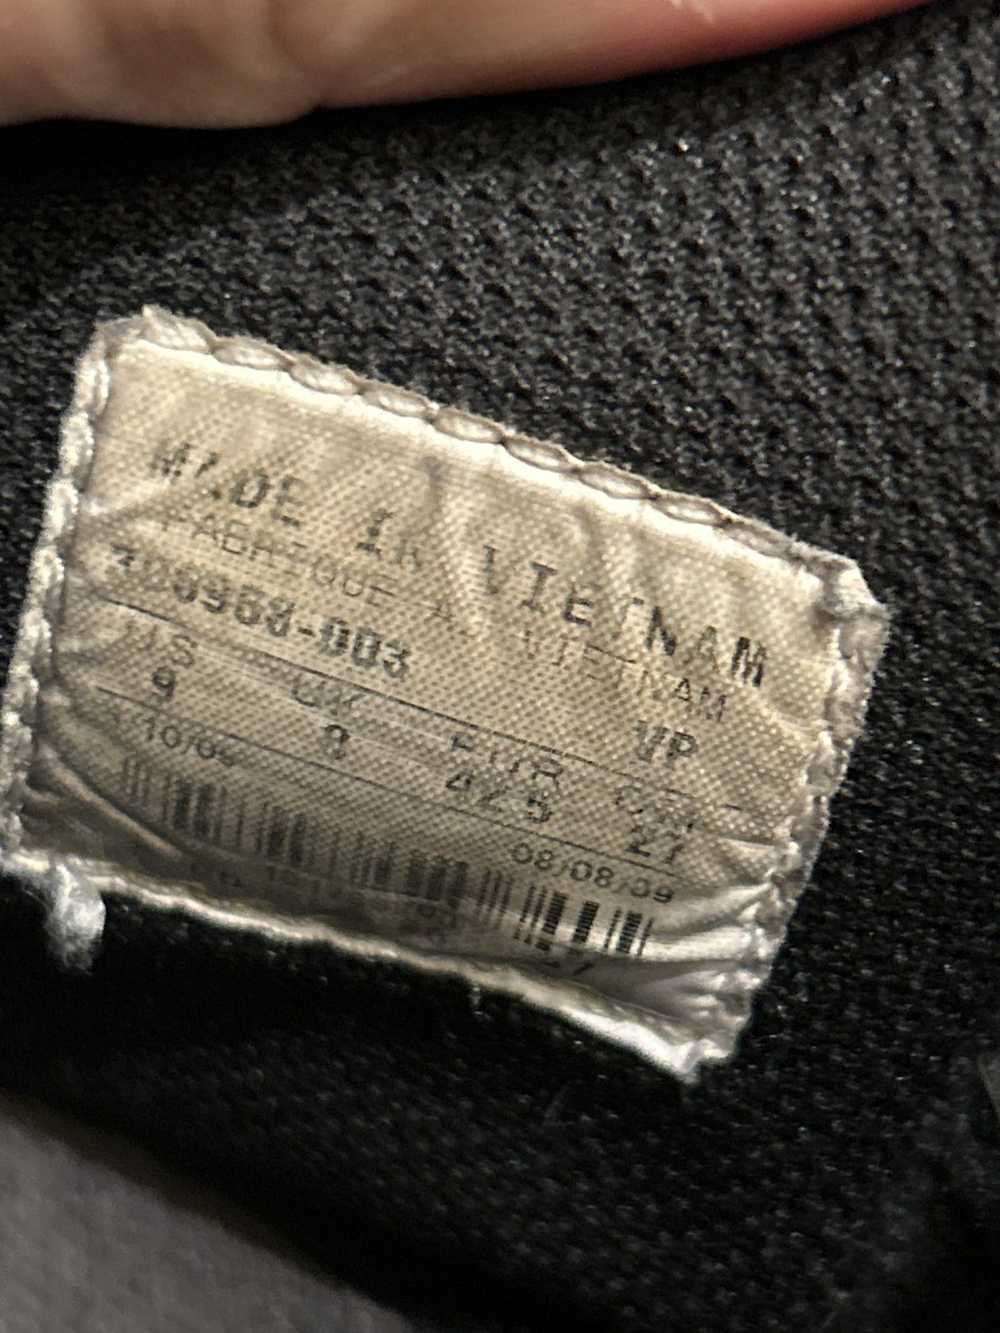 Nike Dunk high Premium “Tweed Pack - image 7